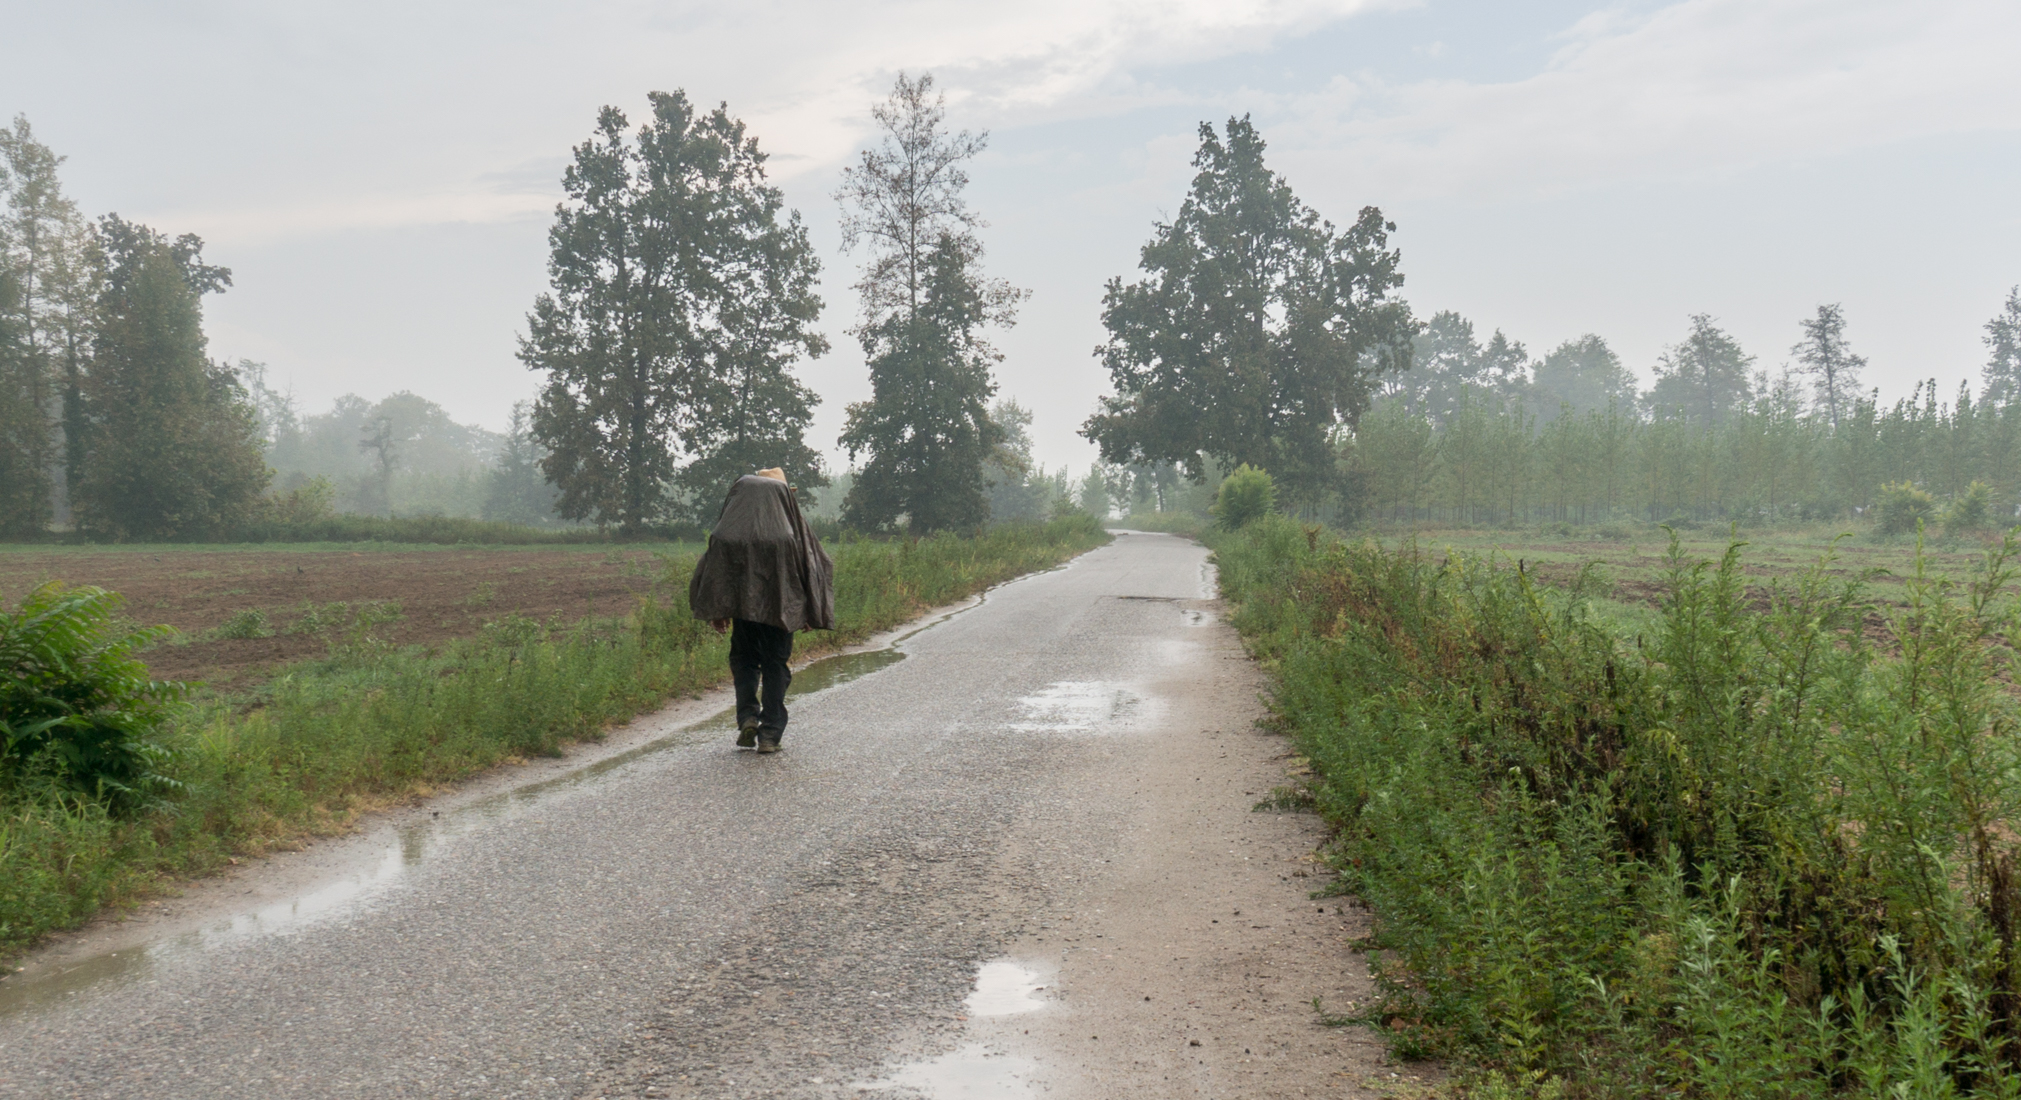 In morning rain a pilgrim on the Via Francigena heads toward Tromello, Italy | Photo by Mike Hudak